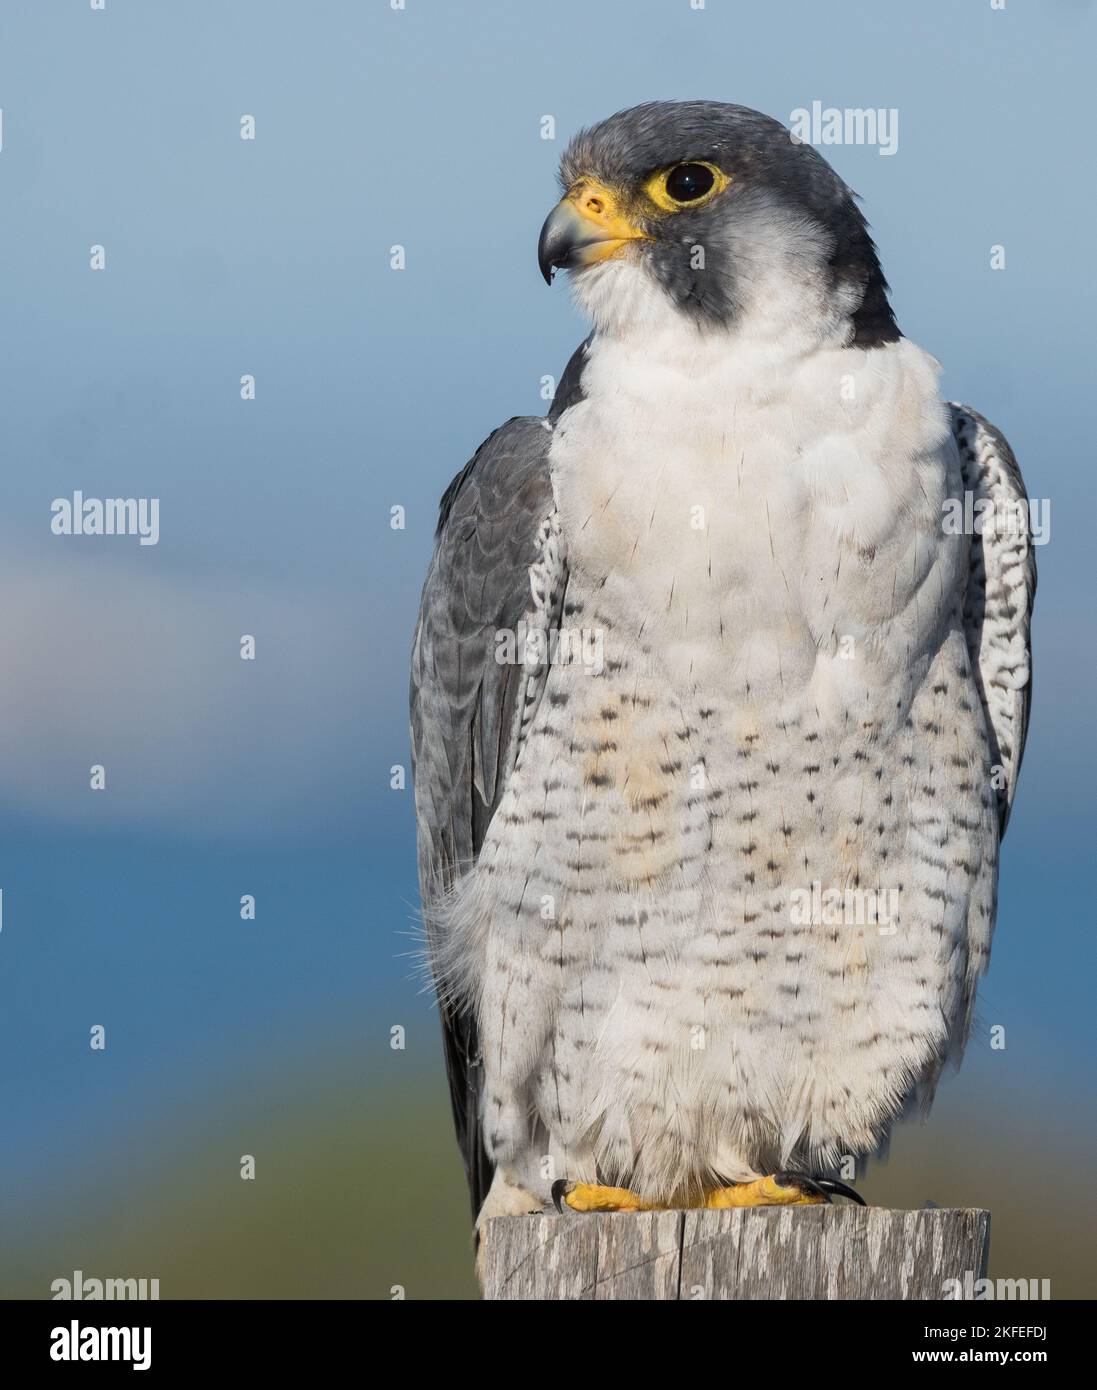 A vertical closeup of a Shaheen falcon, Falco peregrinus peregrinator portrait perched on a wood Stock Photo